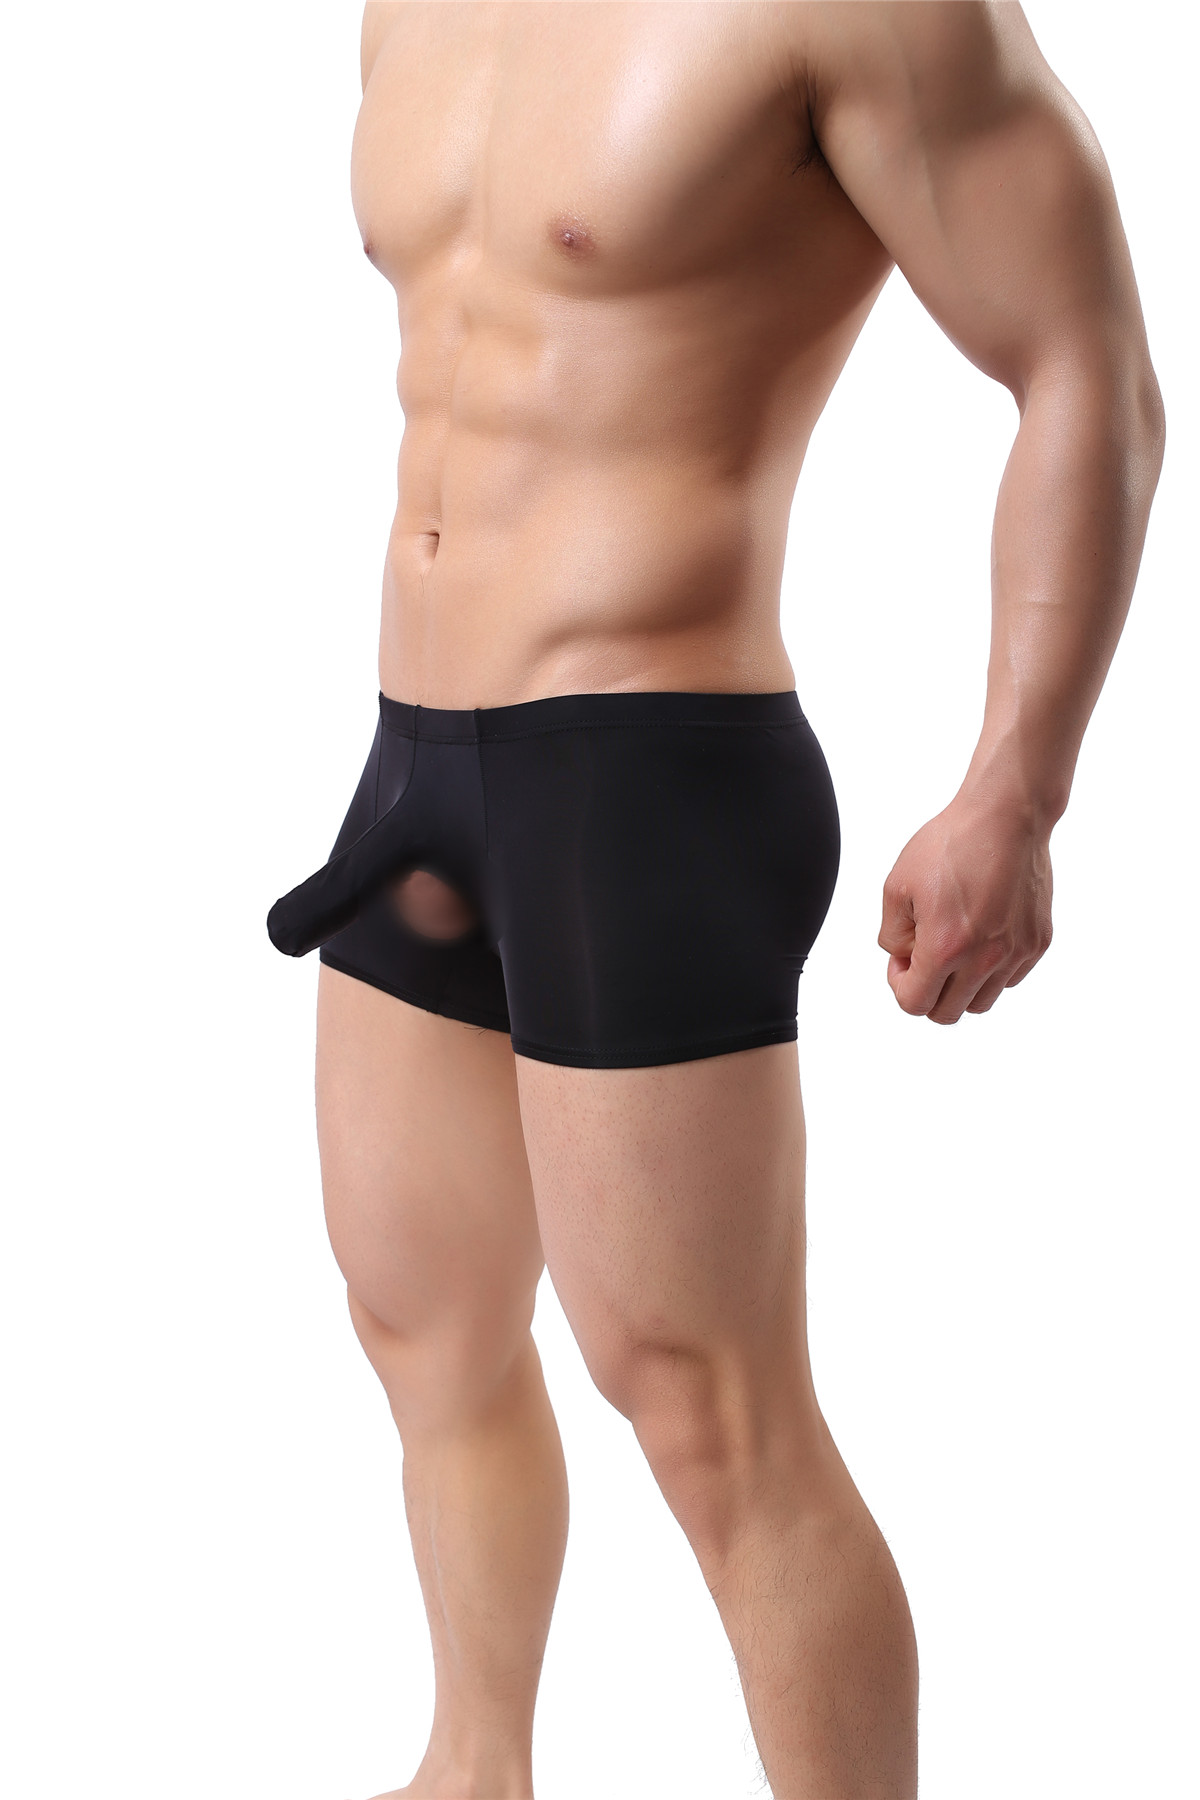 Men Boxer Briefs Open Penis Underwear Sheath Cover Up Pouch Stretch ...